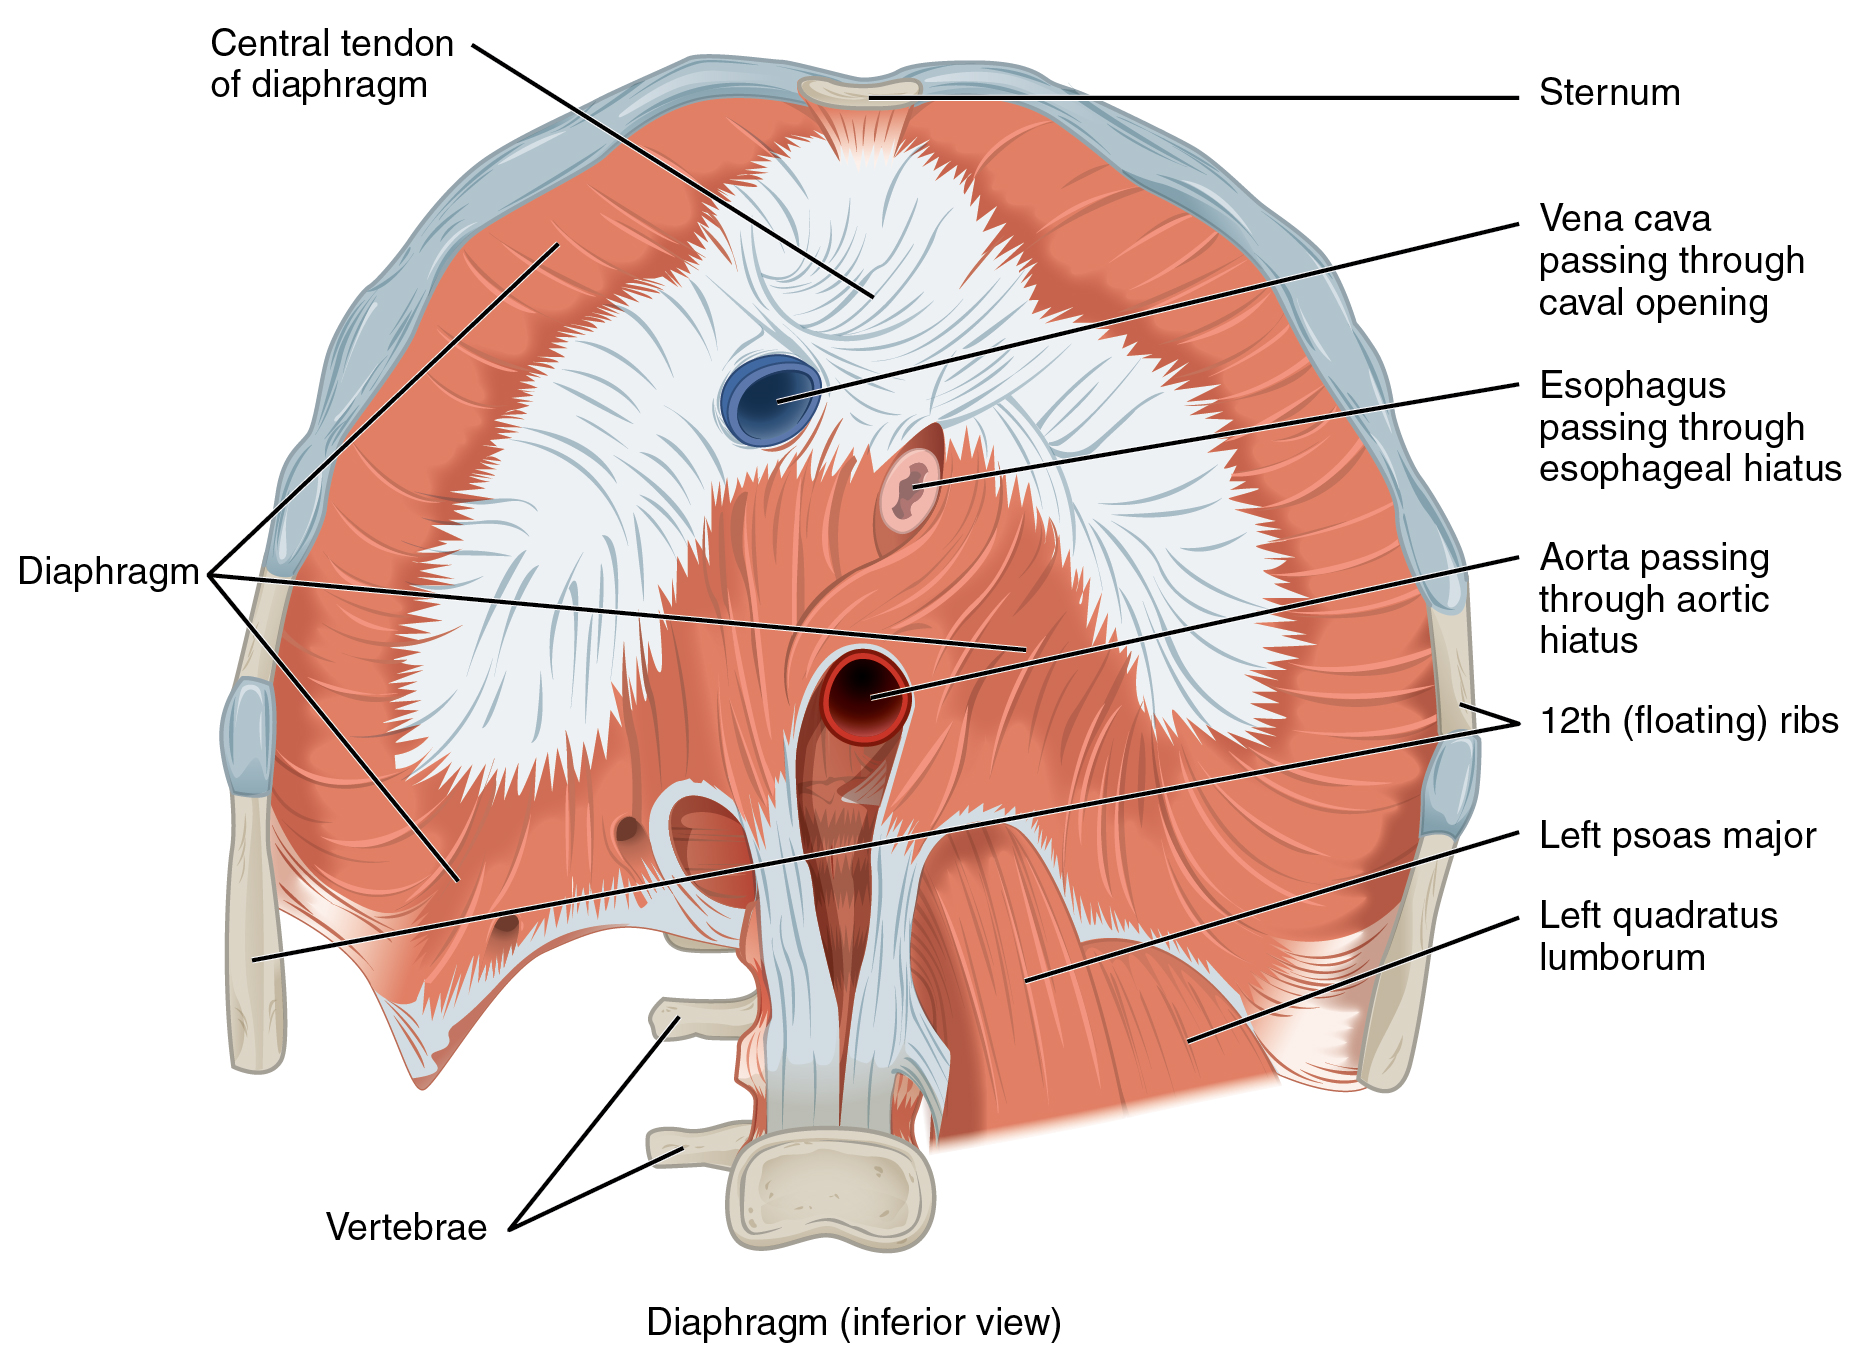 Inferior view of the diaphragm